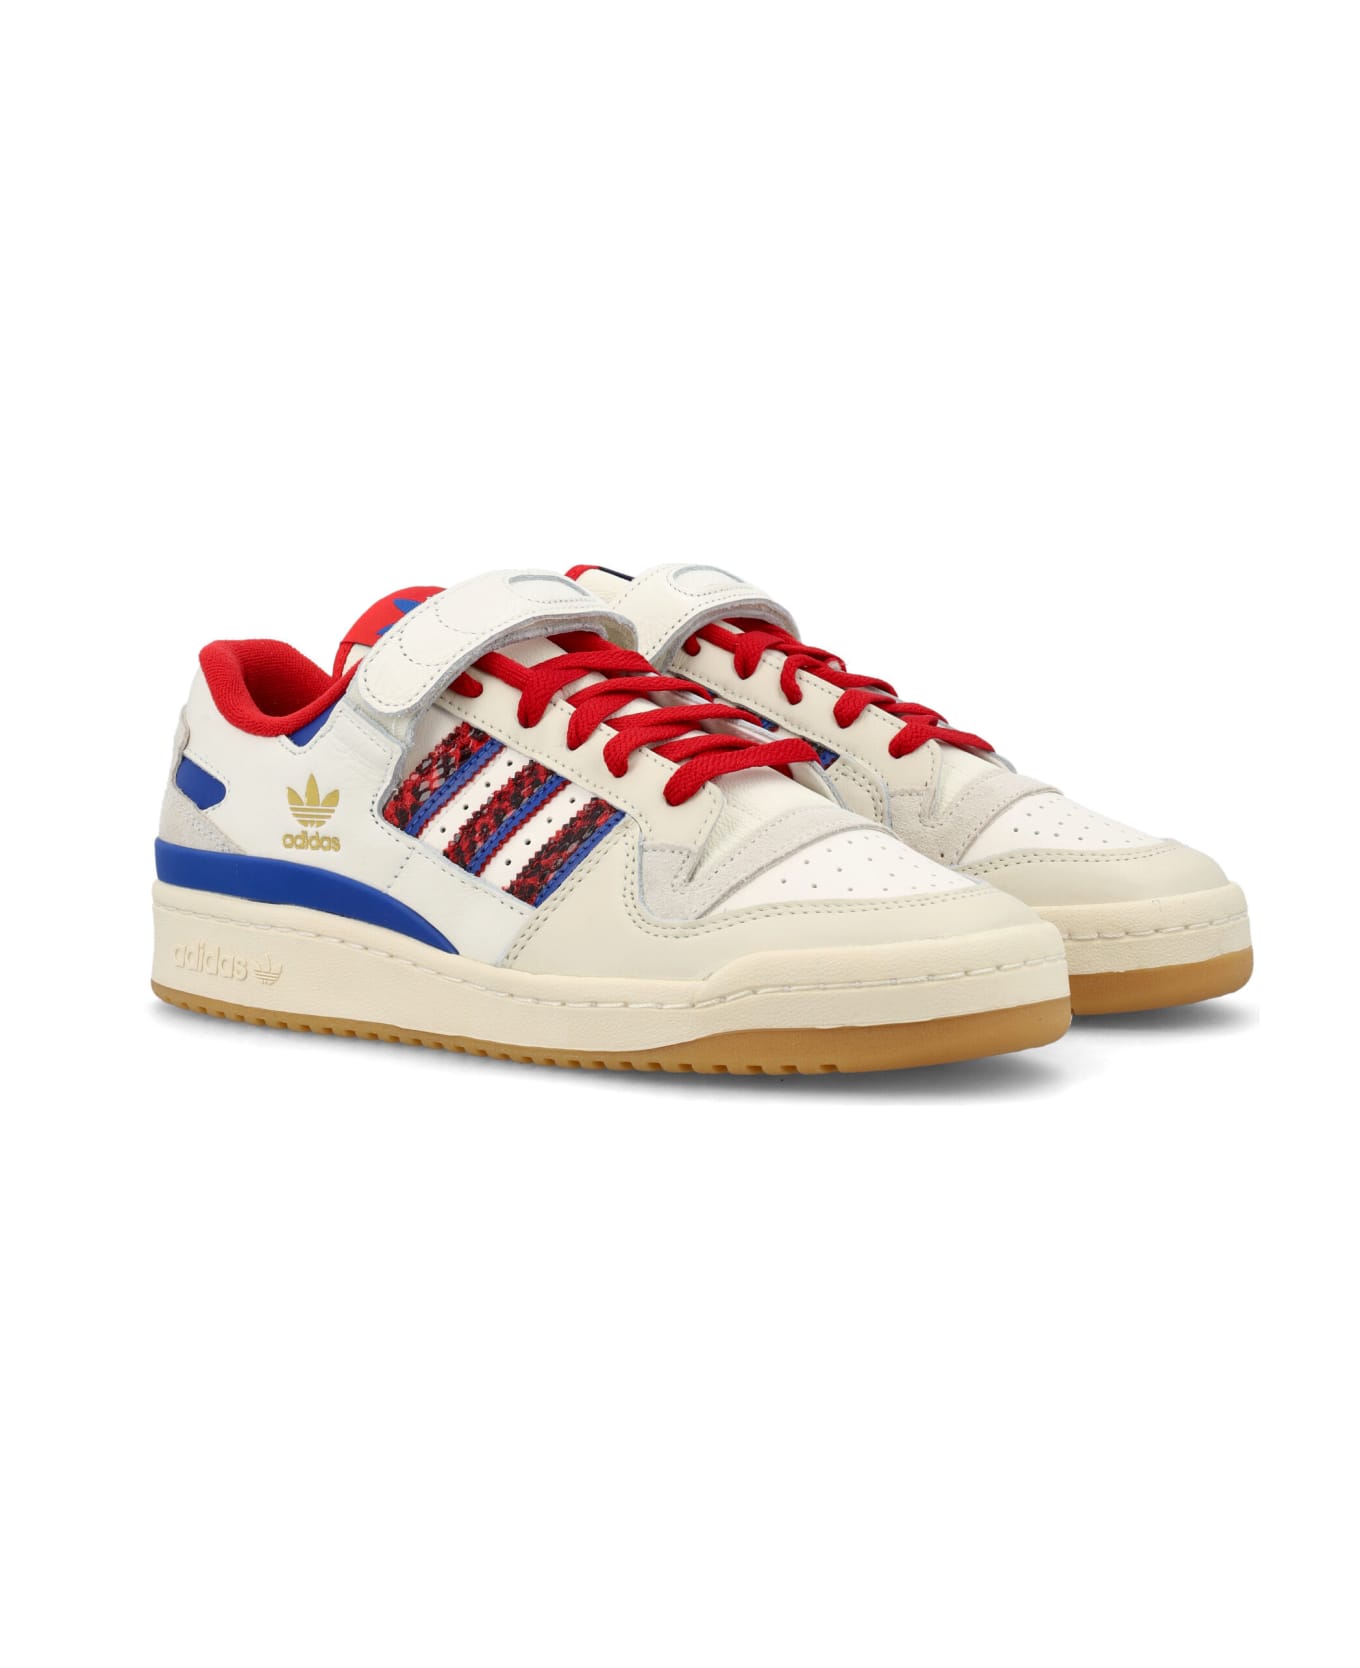 Adidas Originals Forum 84 Low Shoes - WHITE RED